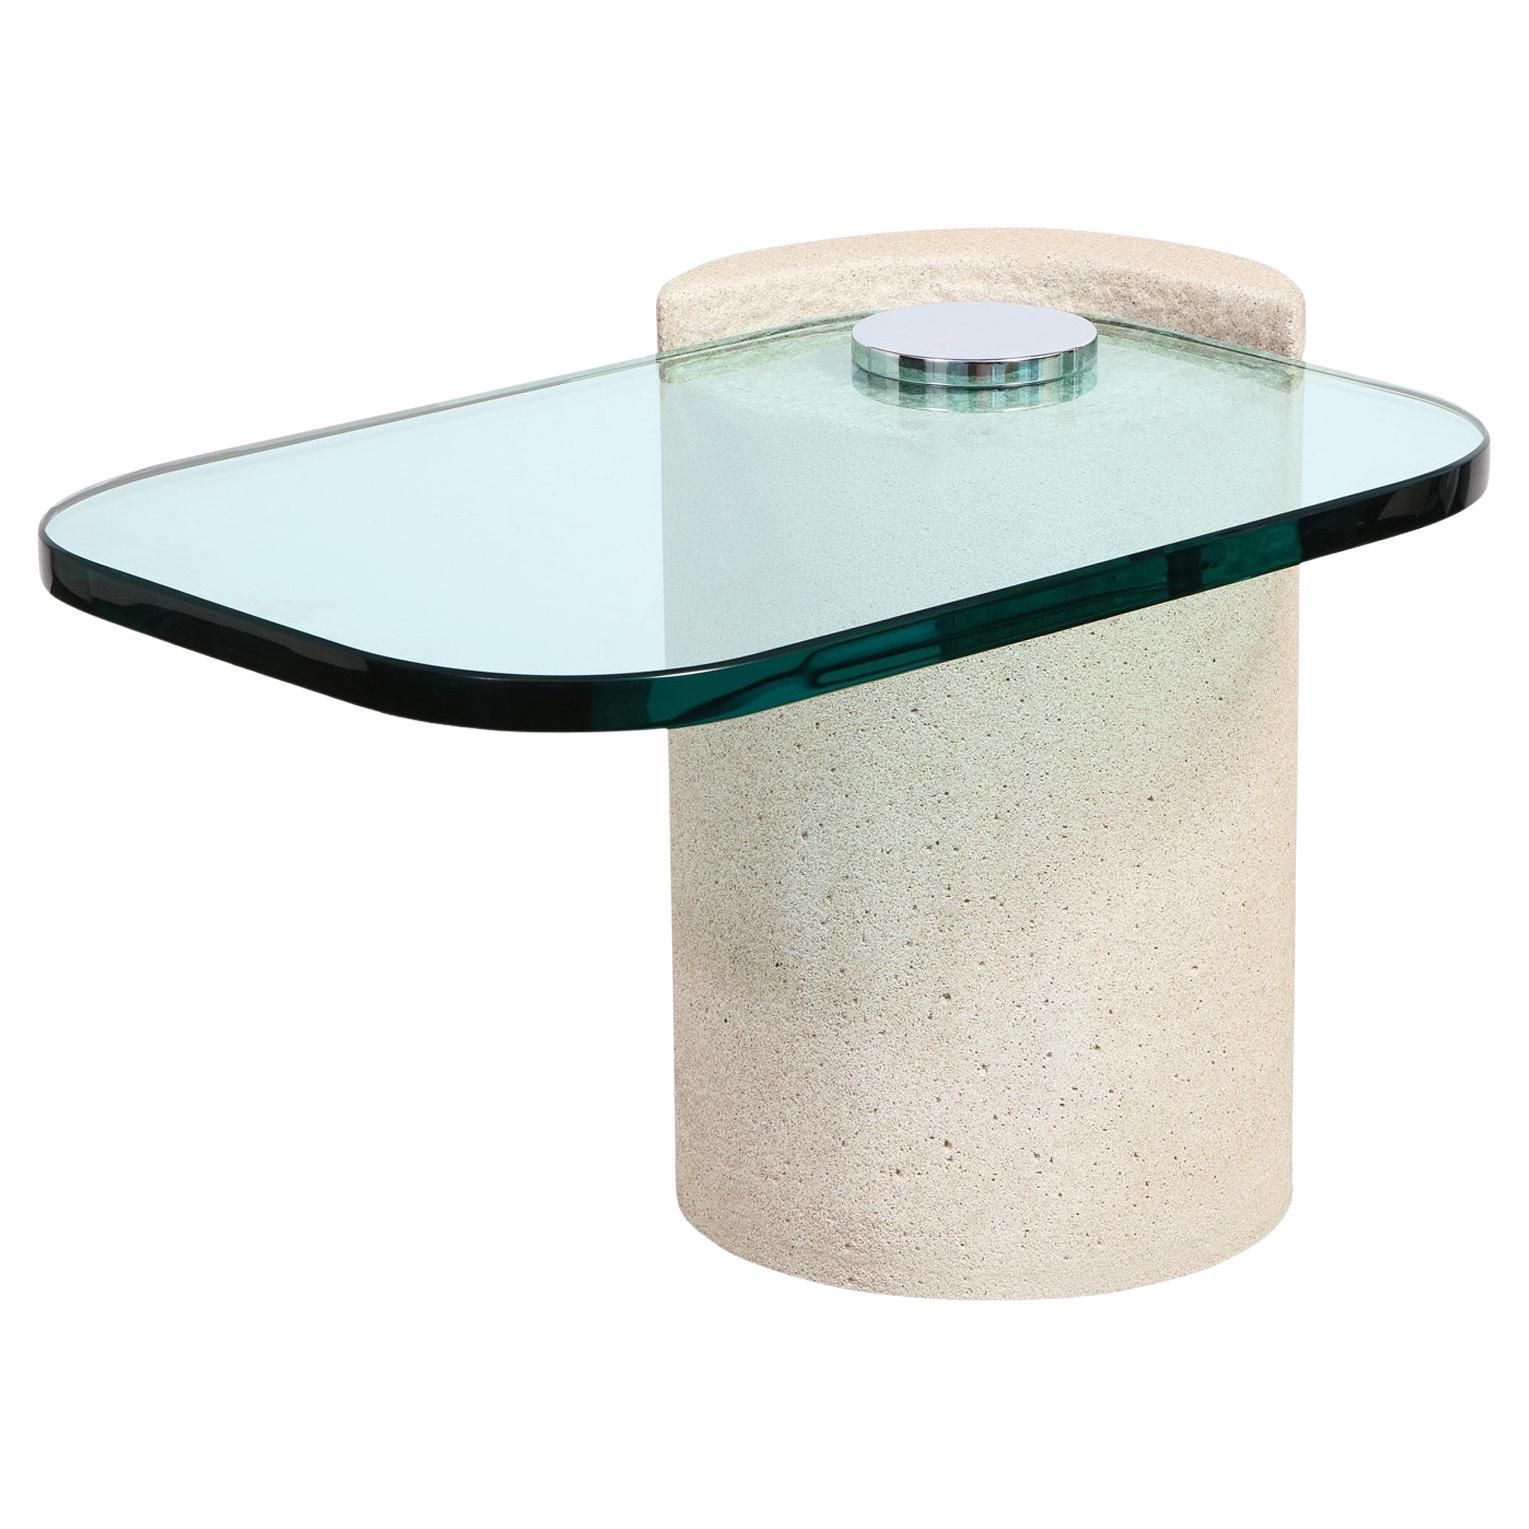 Karl Springer "Sandstone Sculpture Table" with Cantilevered Glass Top 1980s